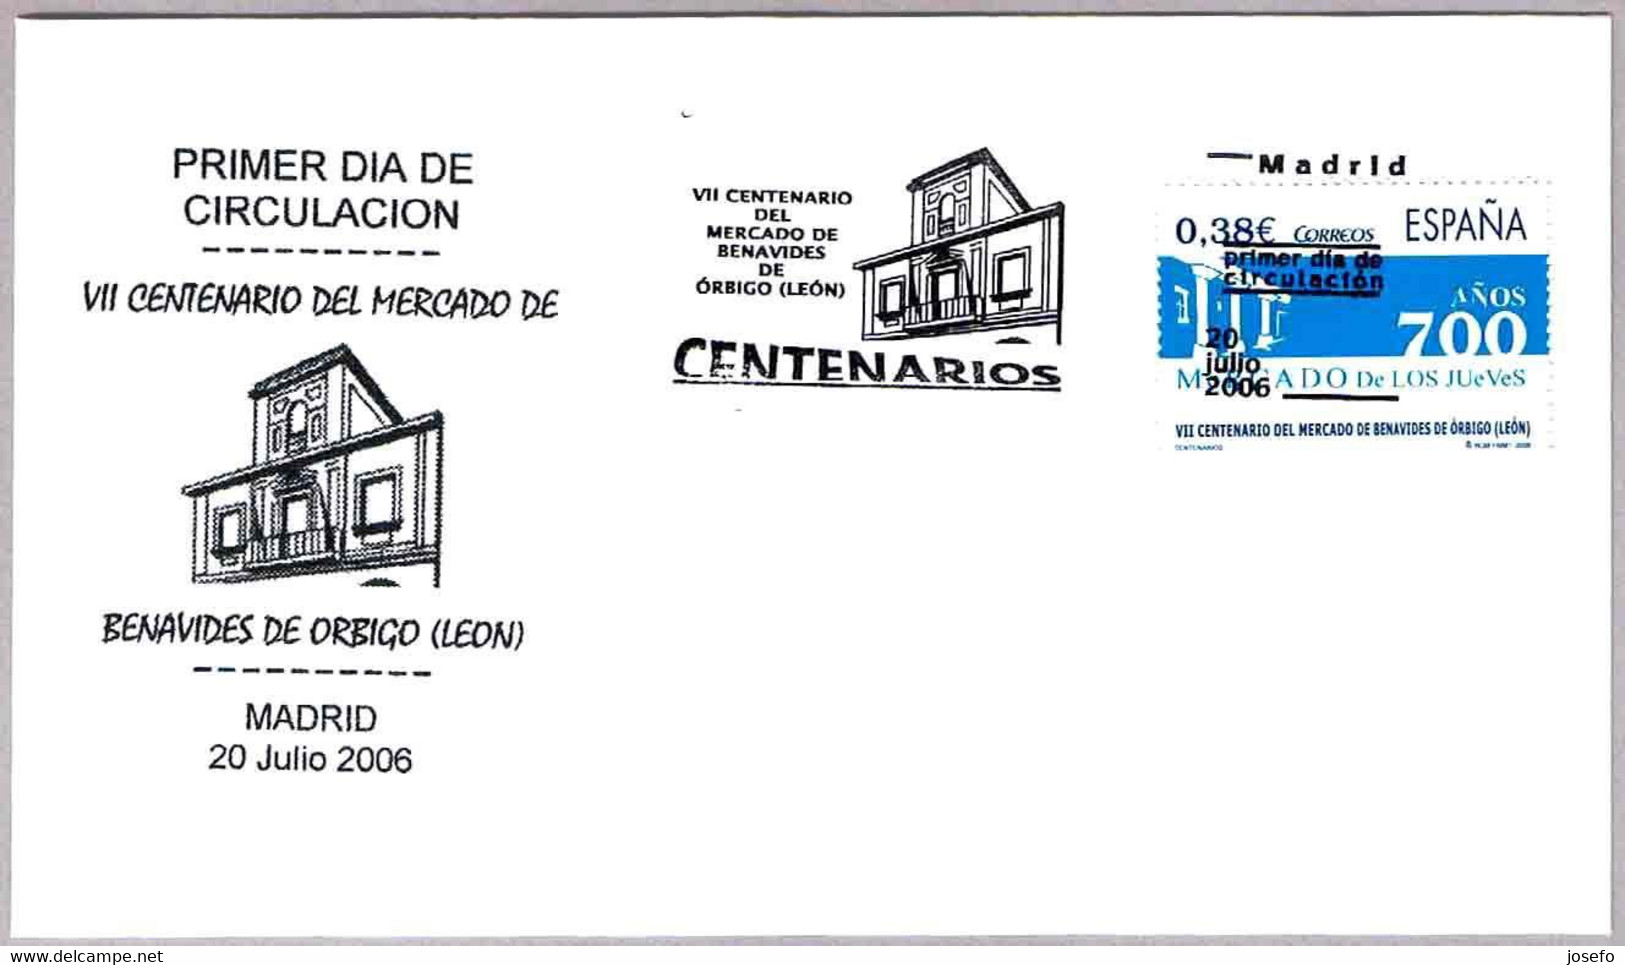 VII CENT. MERCADO DE BENAVIDES DE ORBIGO (LEON). FDC Madrid 2006 - Agriculture